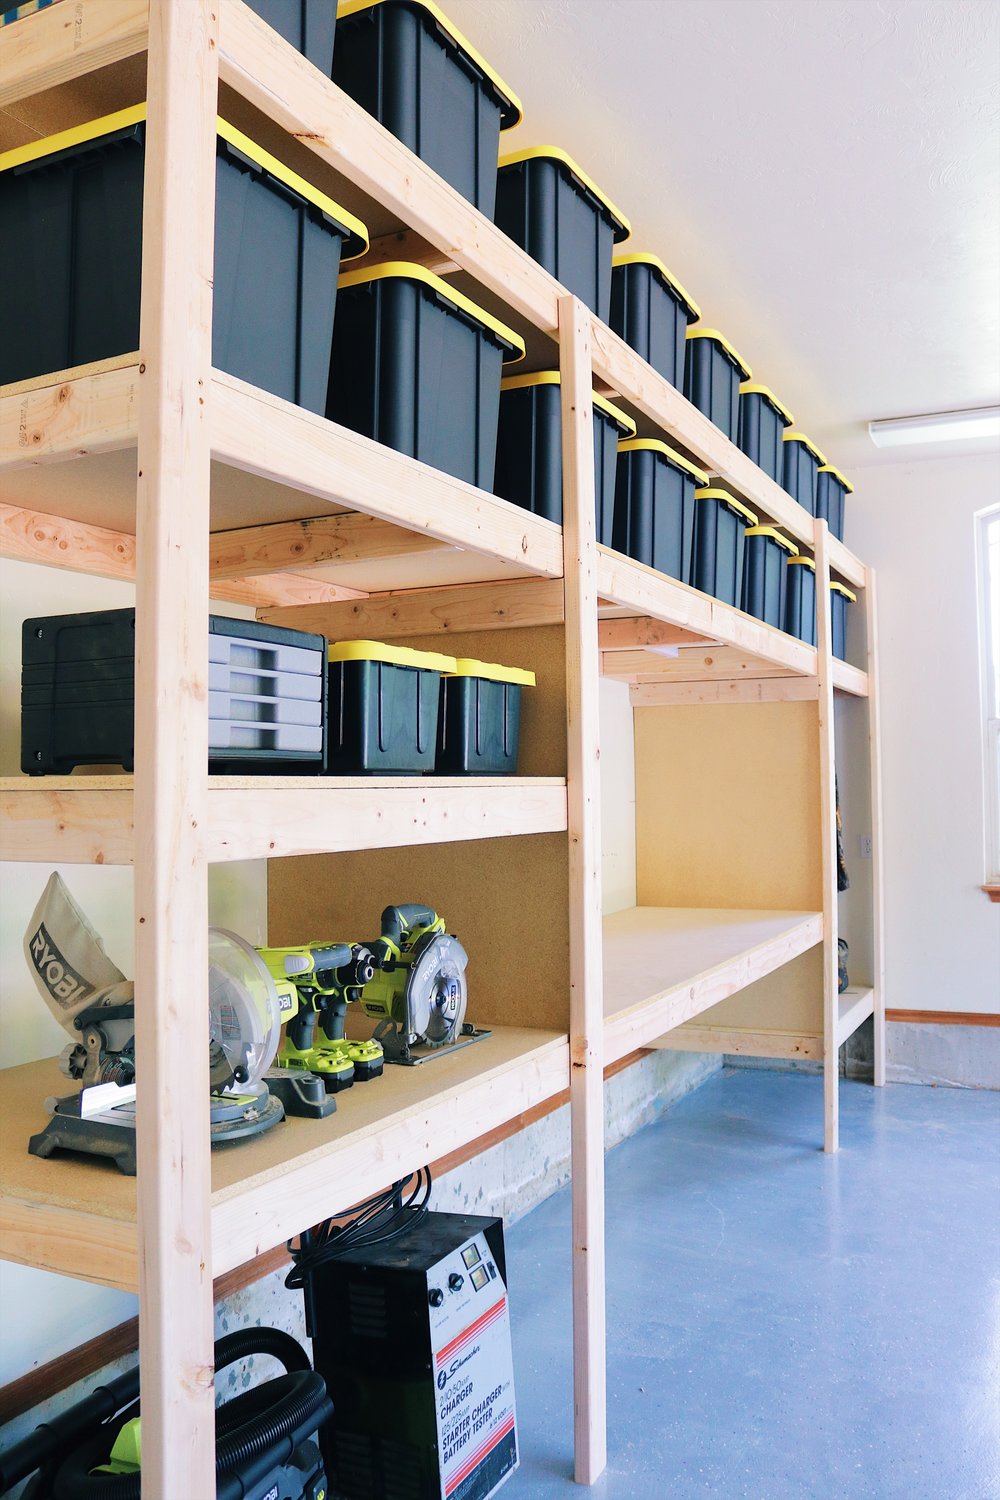 Diy Garage Shelves Modern Builds, How To Build Shelves In Your Garage